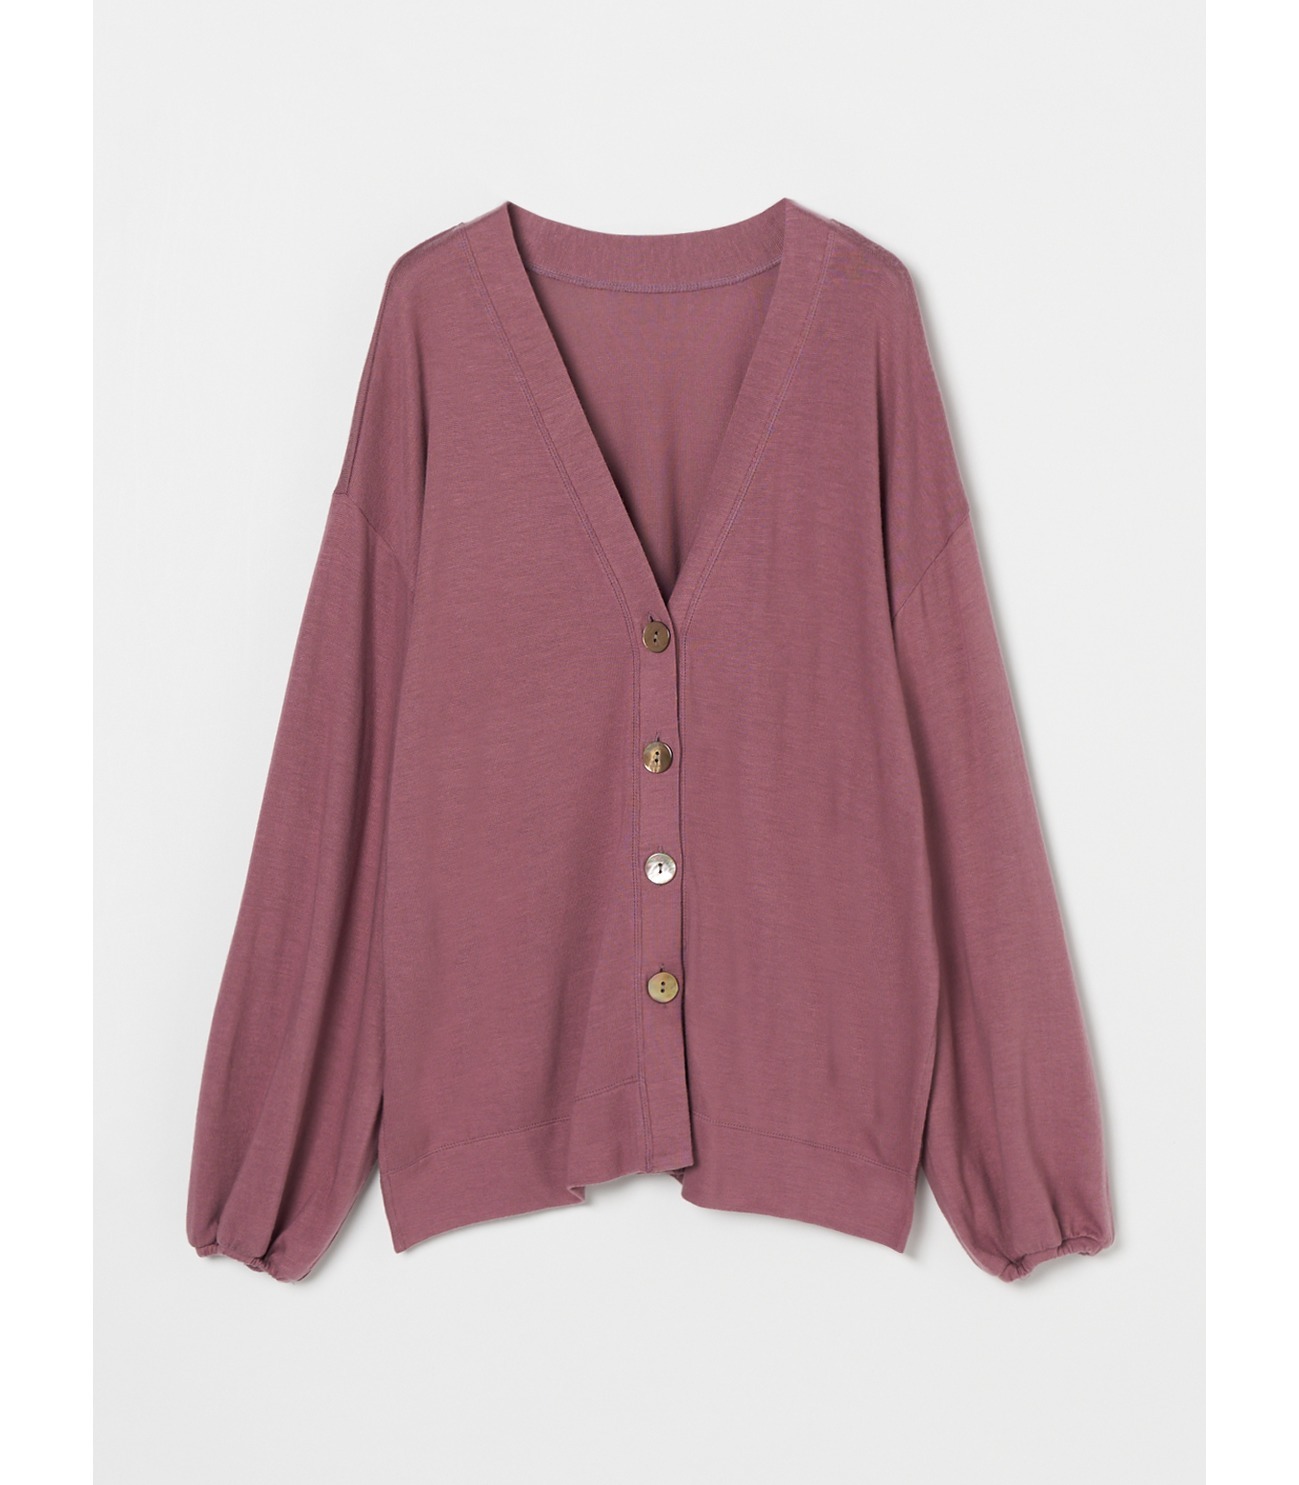 【Naoko Okusa x three dots】Brushed sweater volume sleeve 2way cardy 詳細画像 plum pink 1